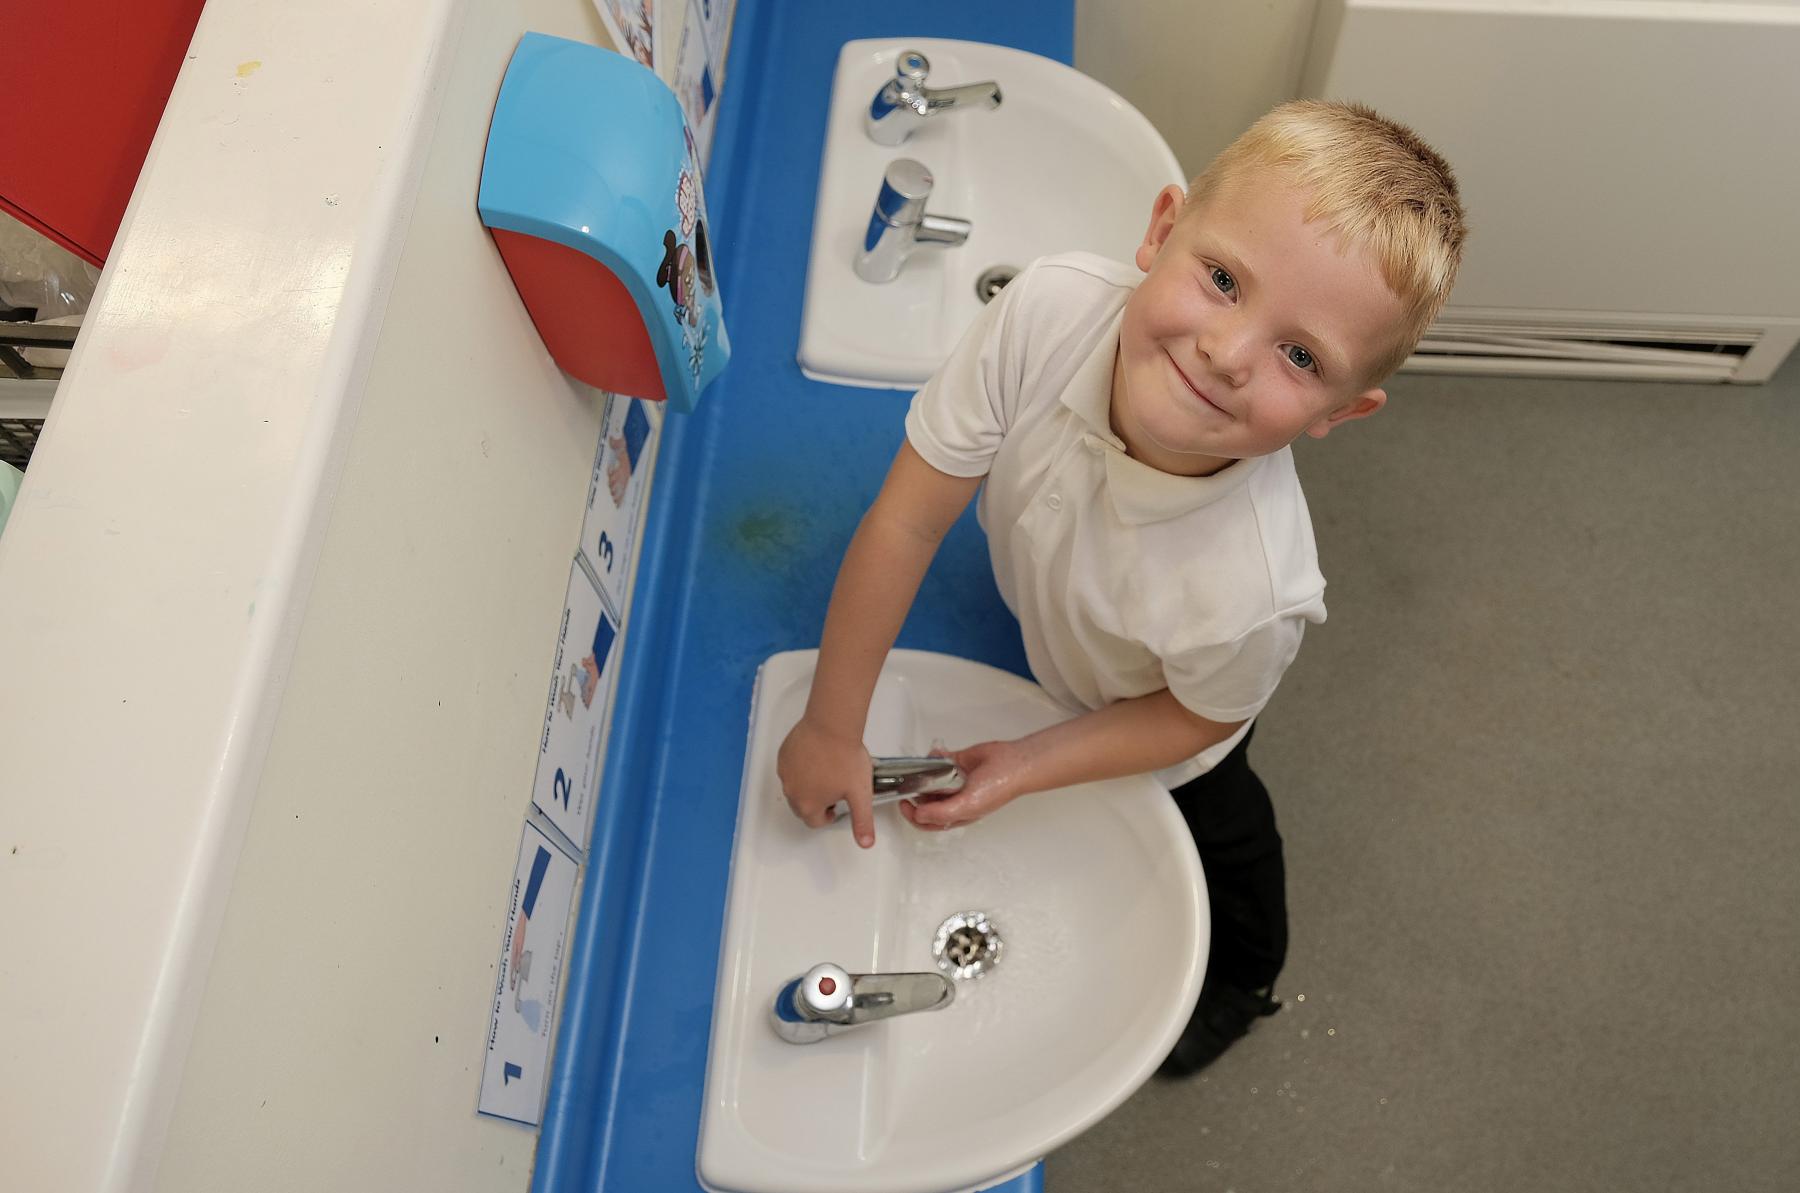 SAFETY FIRST: Children will be encouraged to wash their hands.